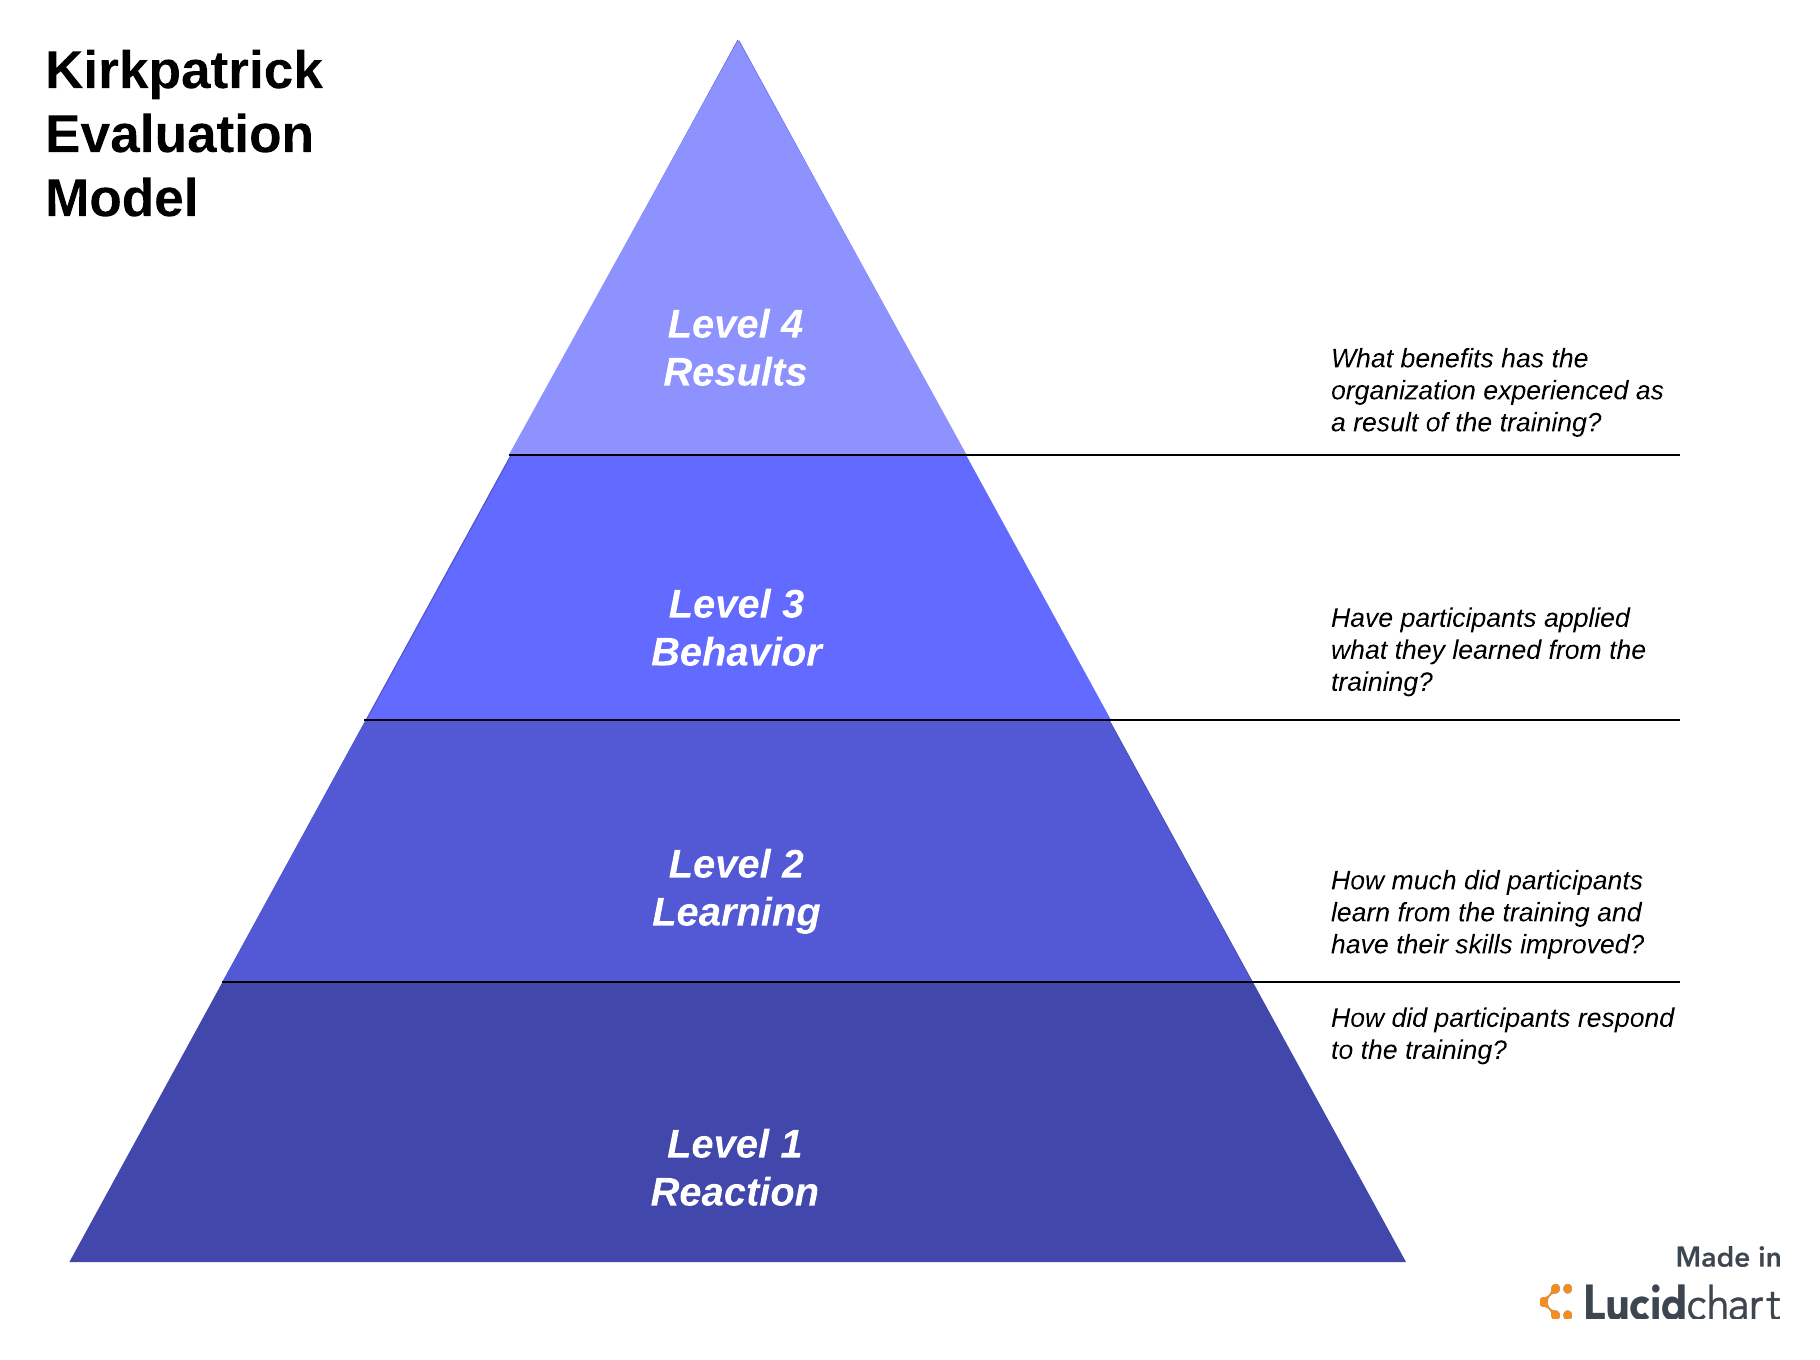 Kirkpatrick evaluation model 